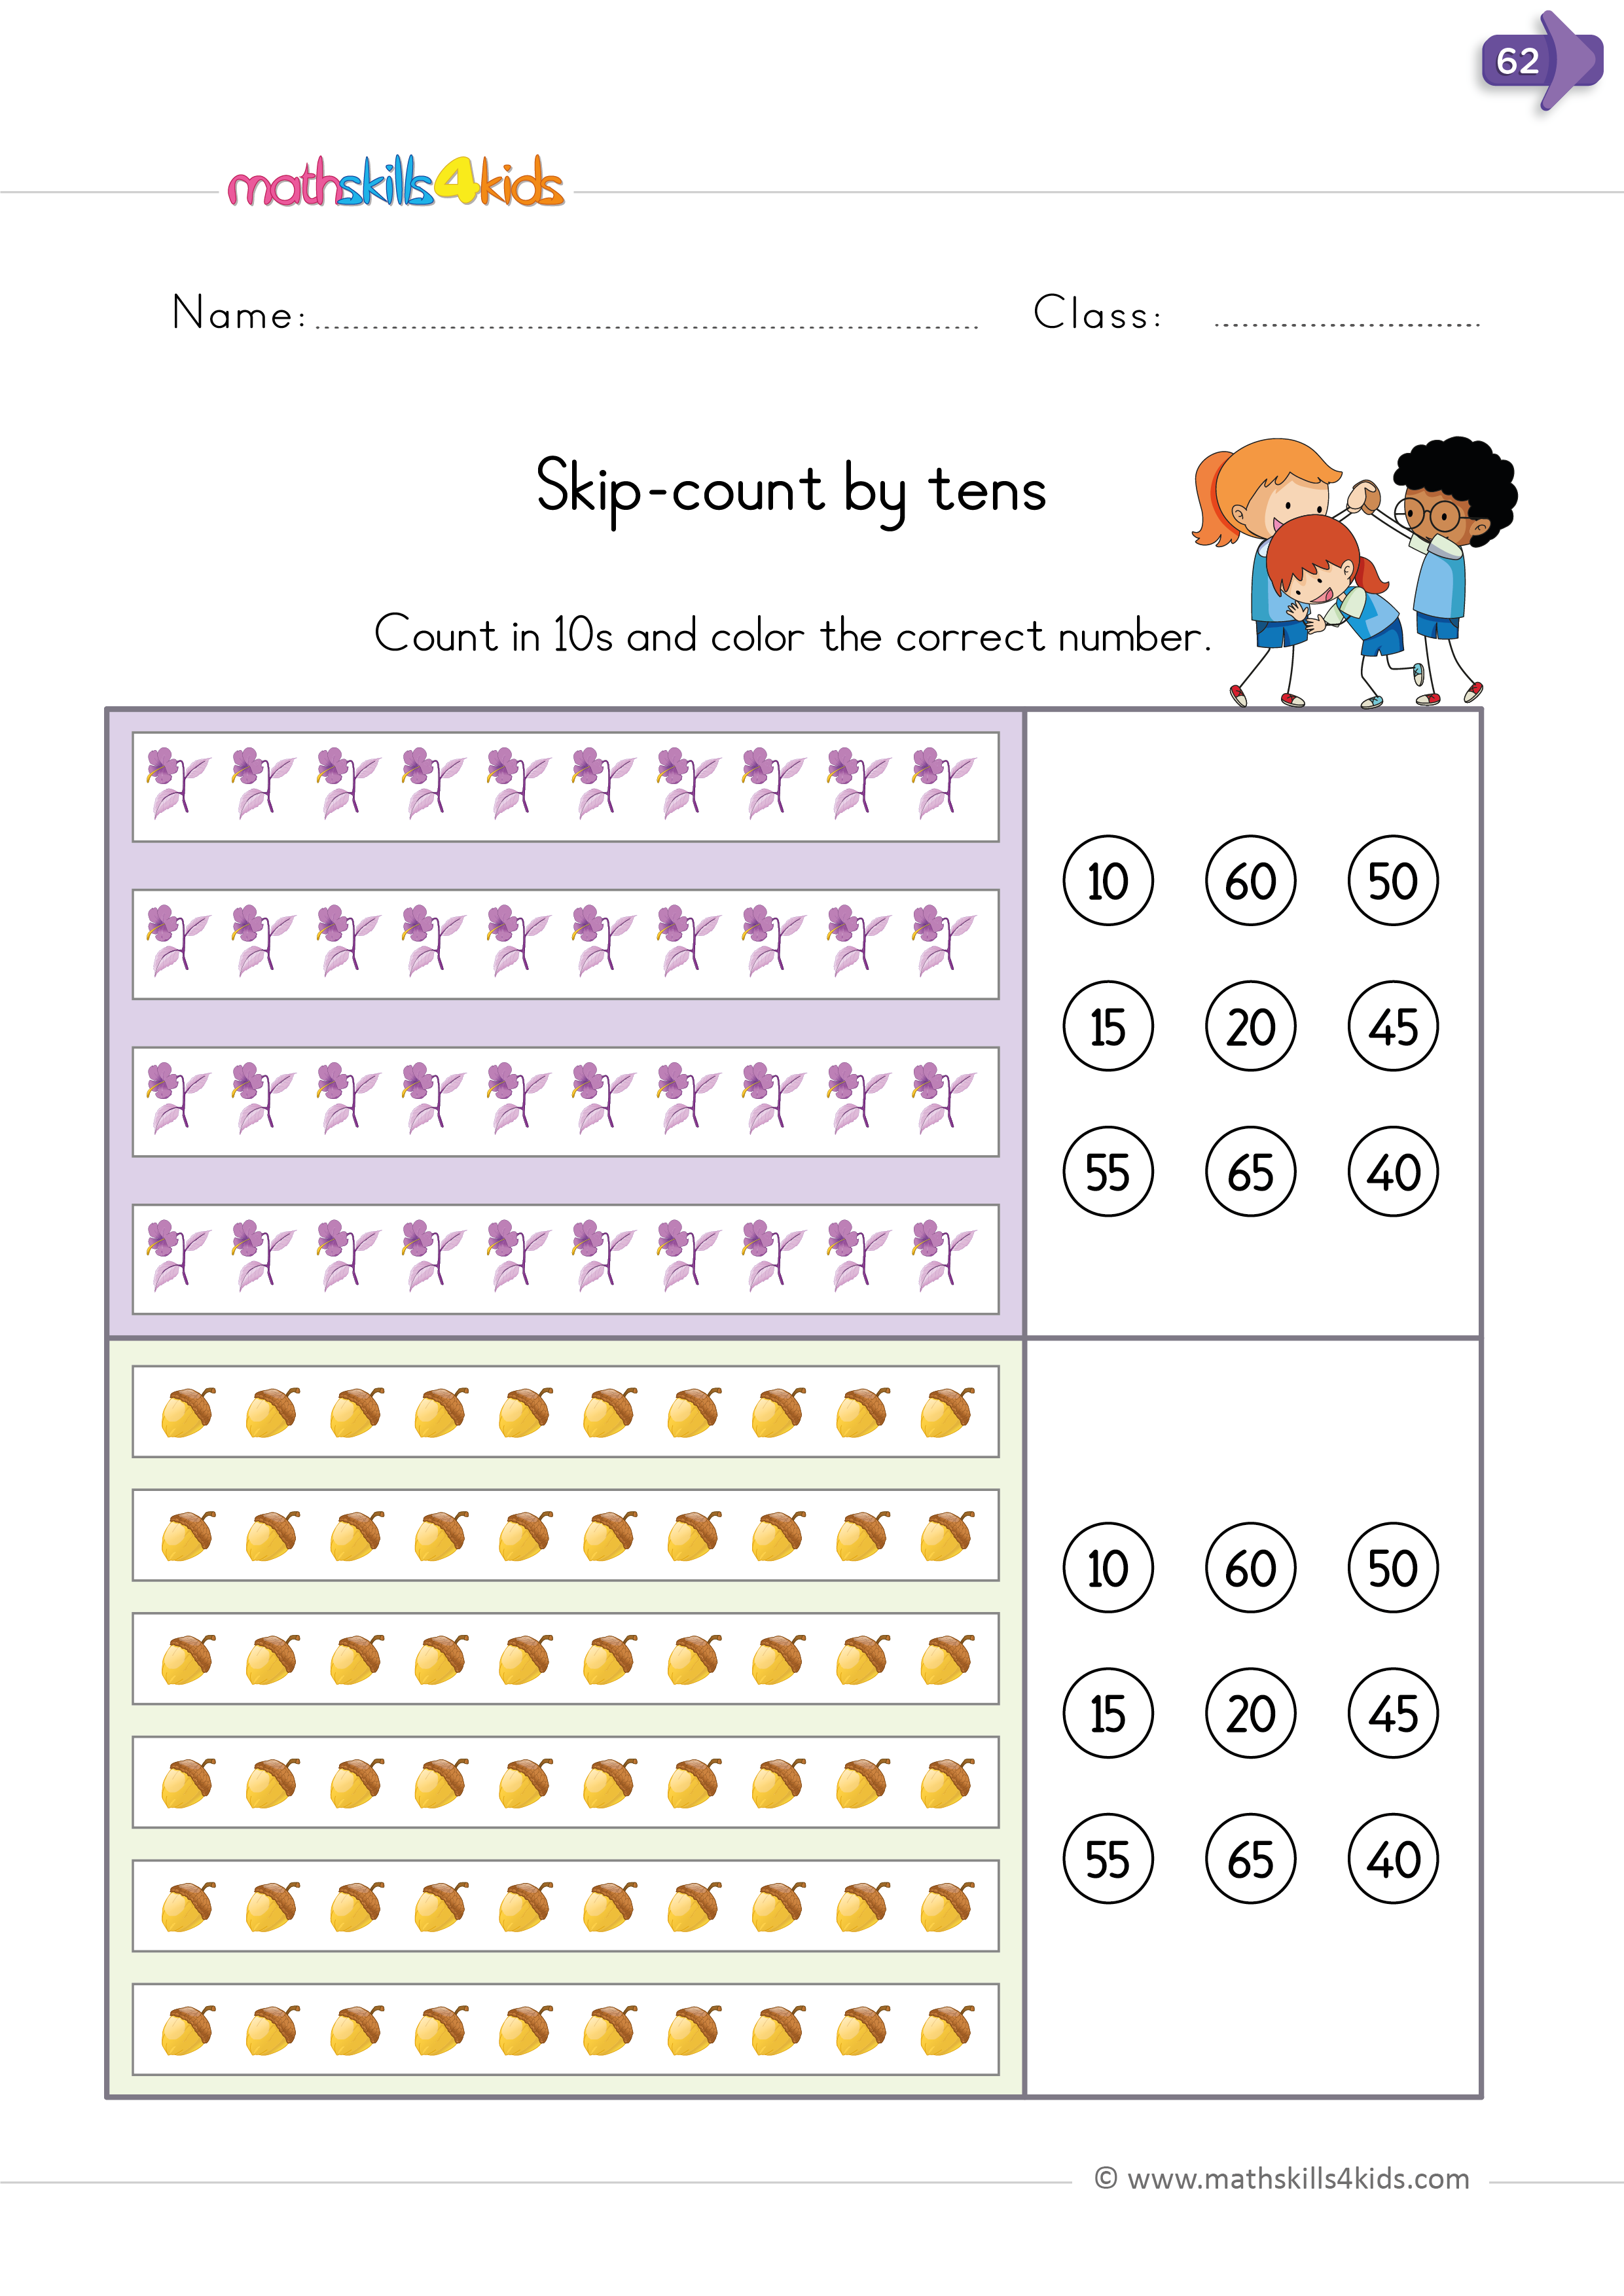 kindergarten math worksheet - skip count by tens up to hundreds